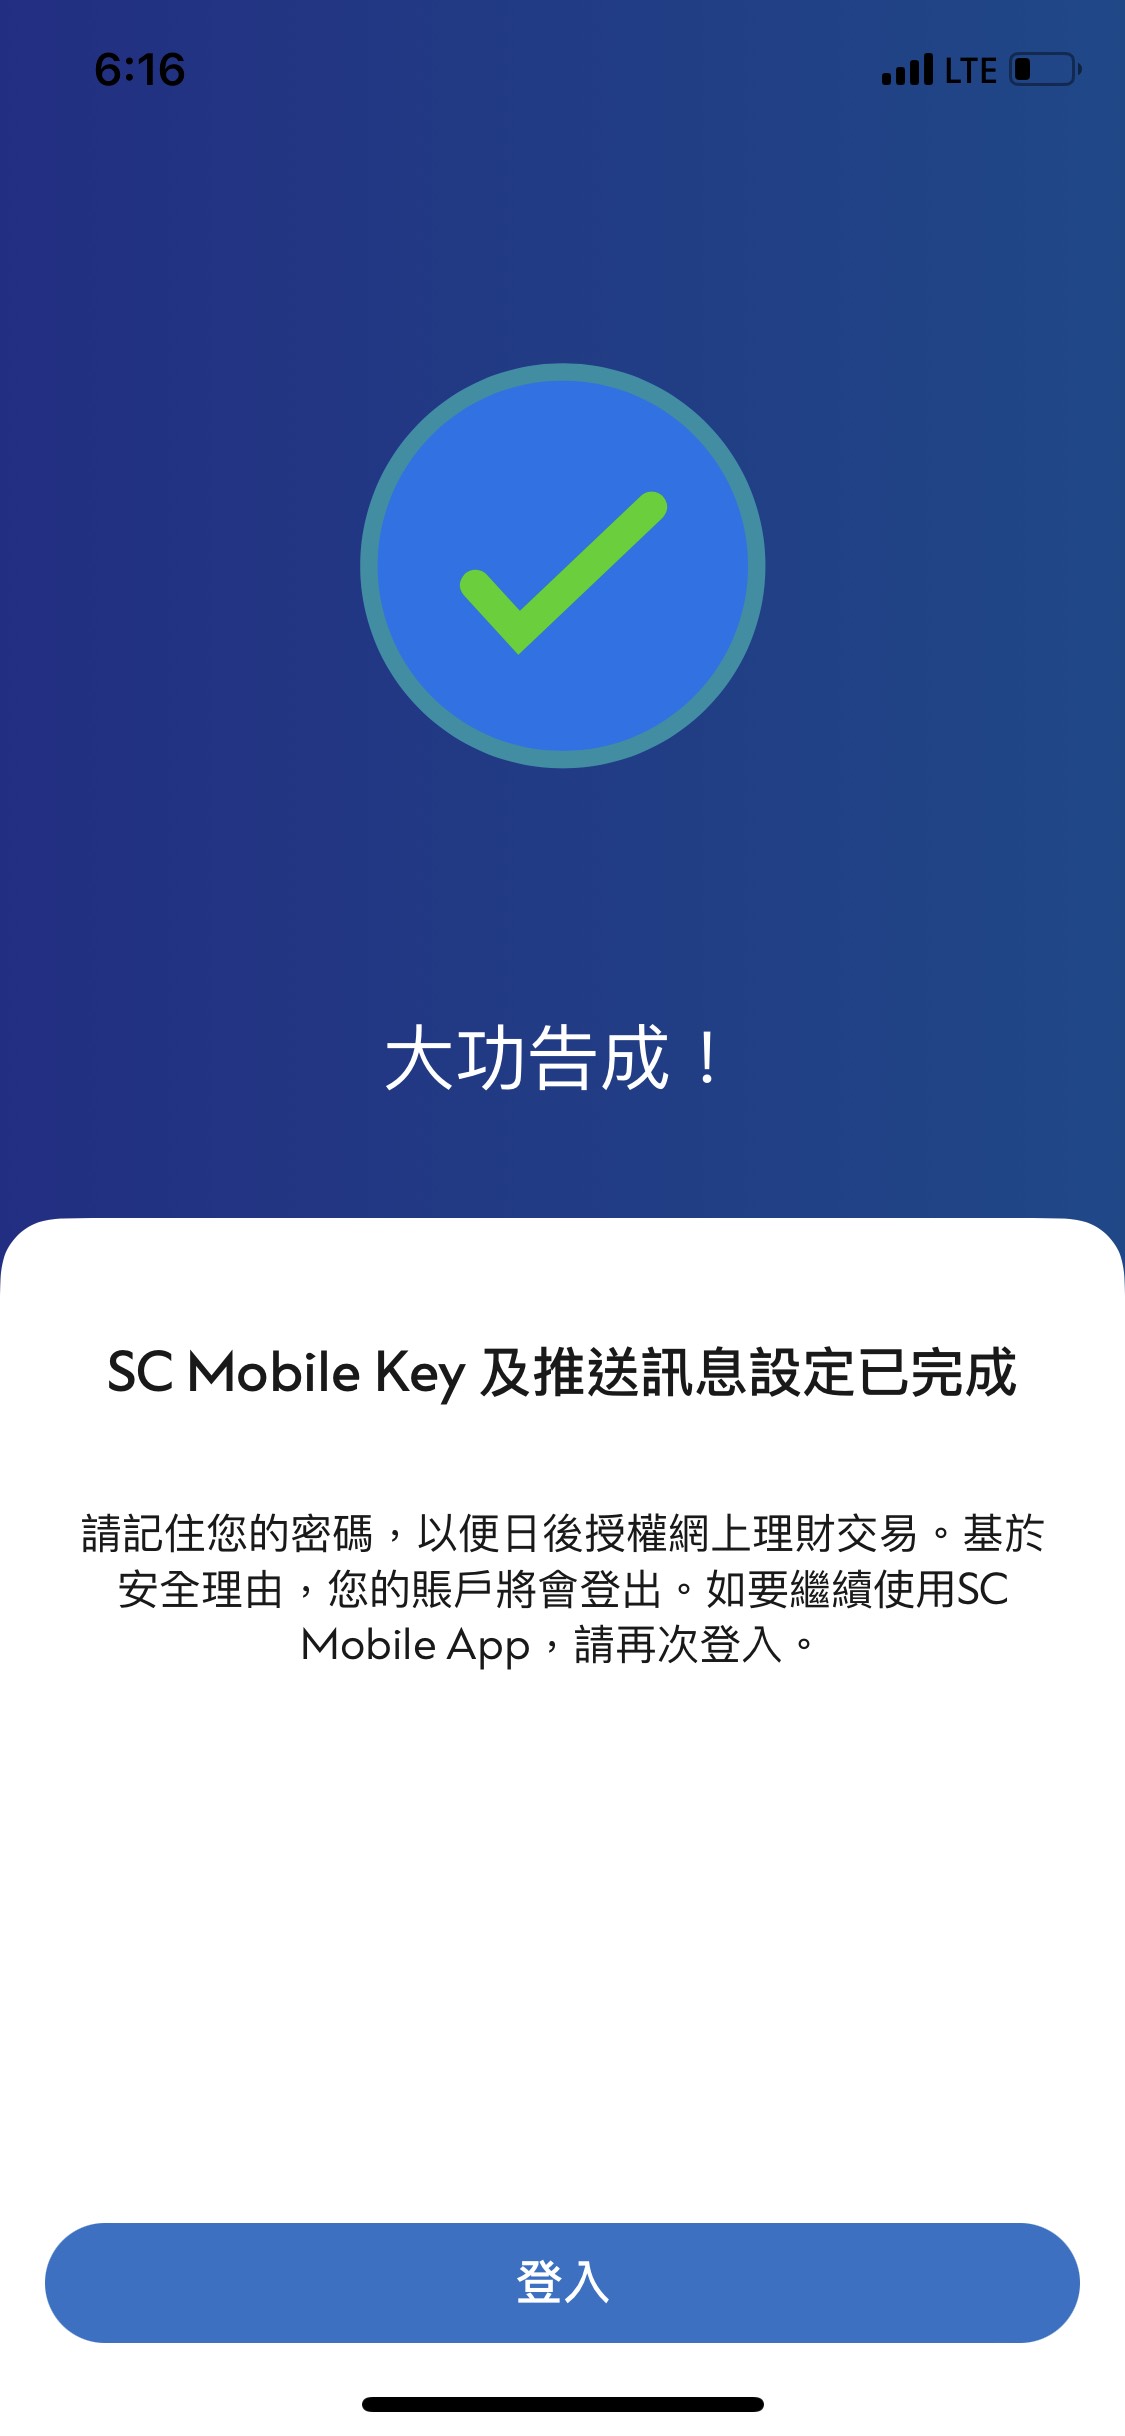 全新SC Mobile App用戶於SC Mobile Key啟動推送訊息服務步驟7